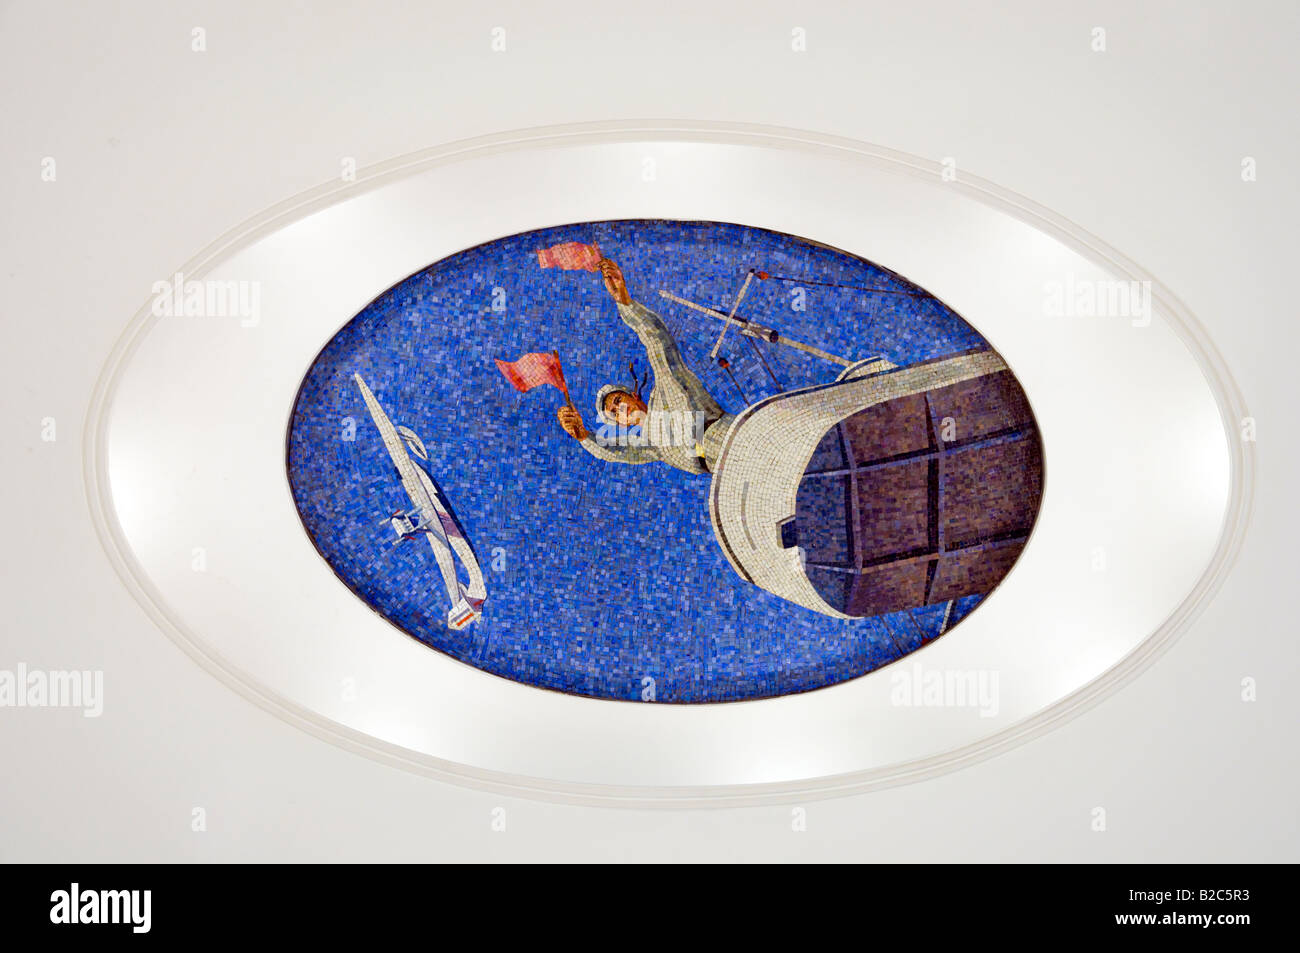 Socialist Realist mosaic by Deineka on ceiling of Mayakovskaya metro station, Moscow, Russia Stock Photo